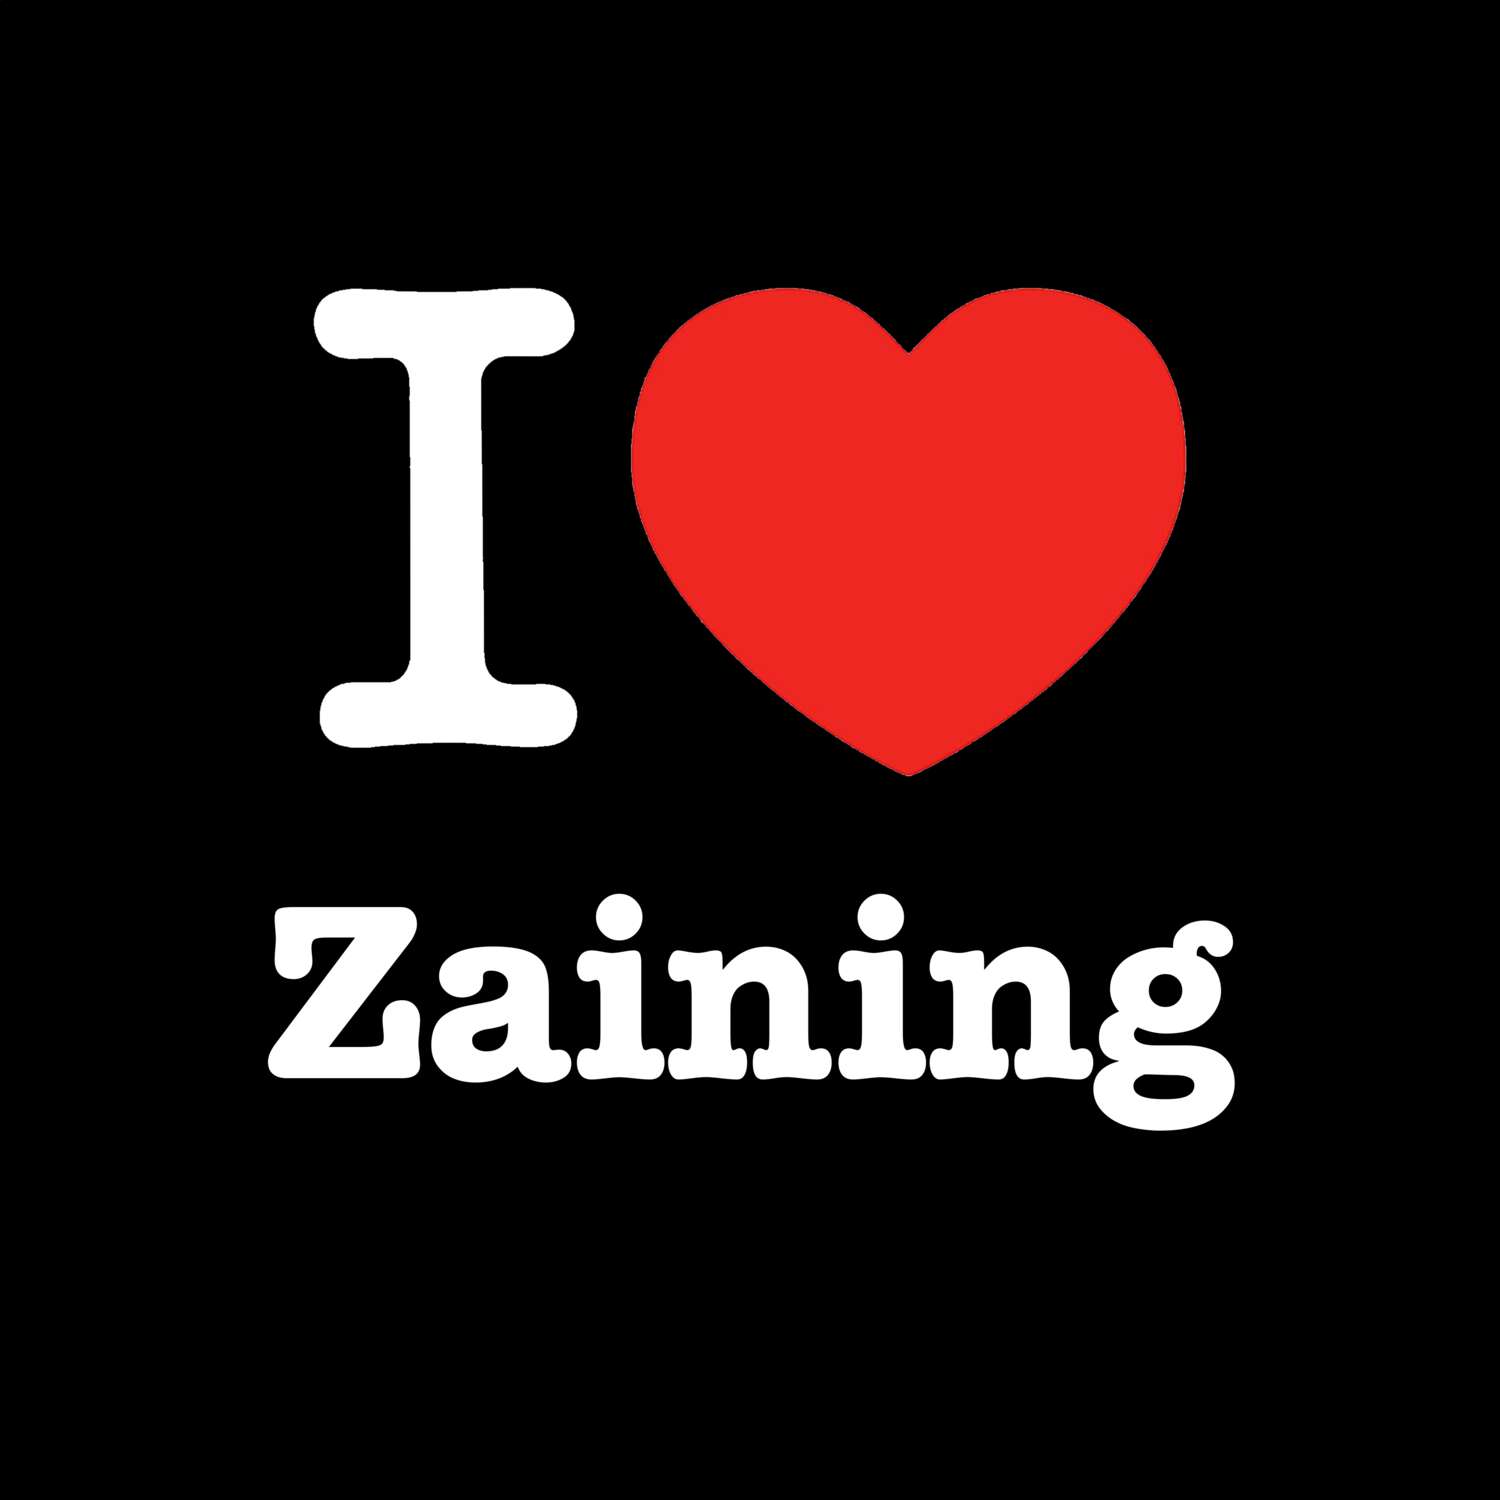 Zaining T-Shirt »I love«